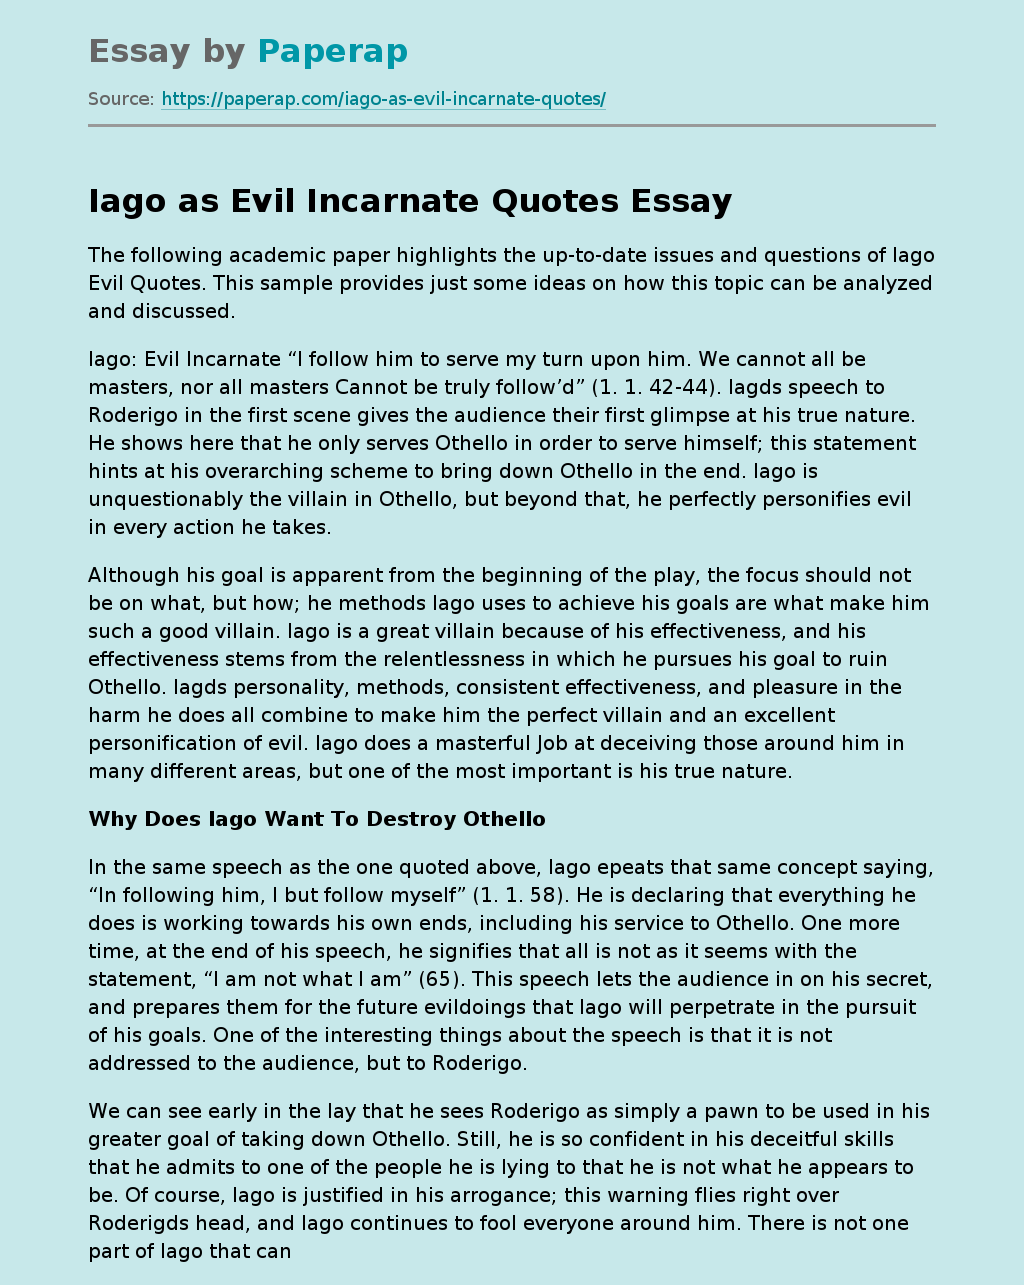 Iago as Evil Incarnate Quotes